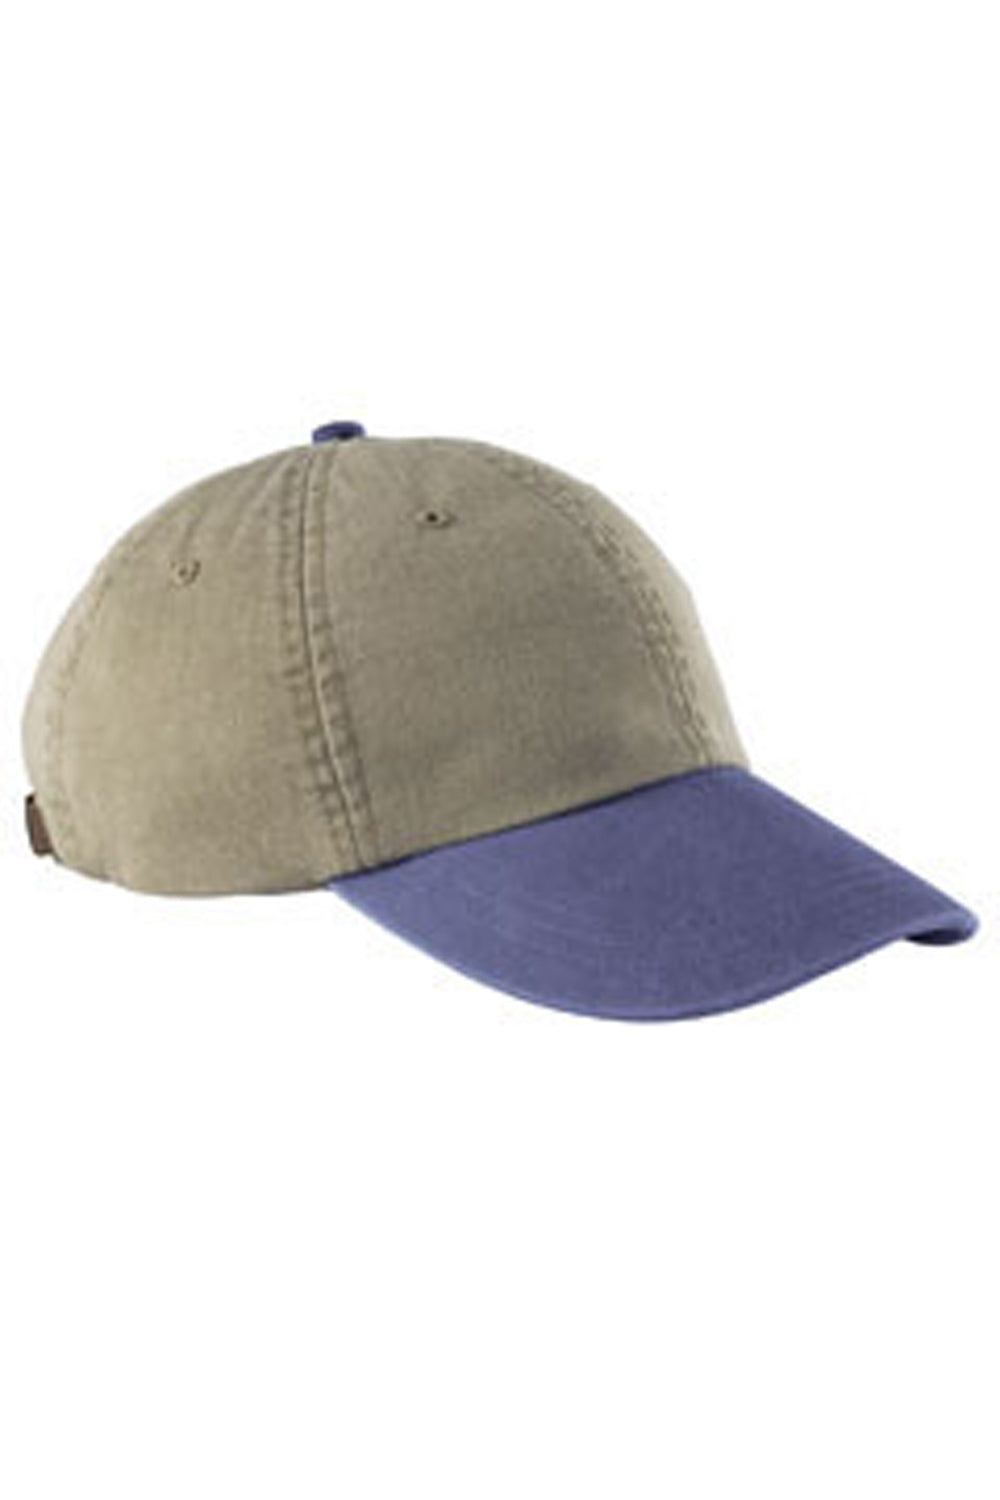 Adams AD969 Mens Adjustable Hat Khaki/Royal Blue Flat Front